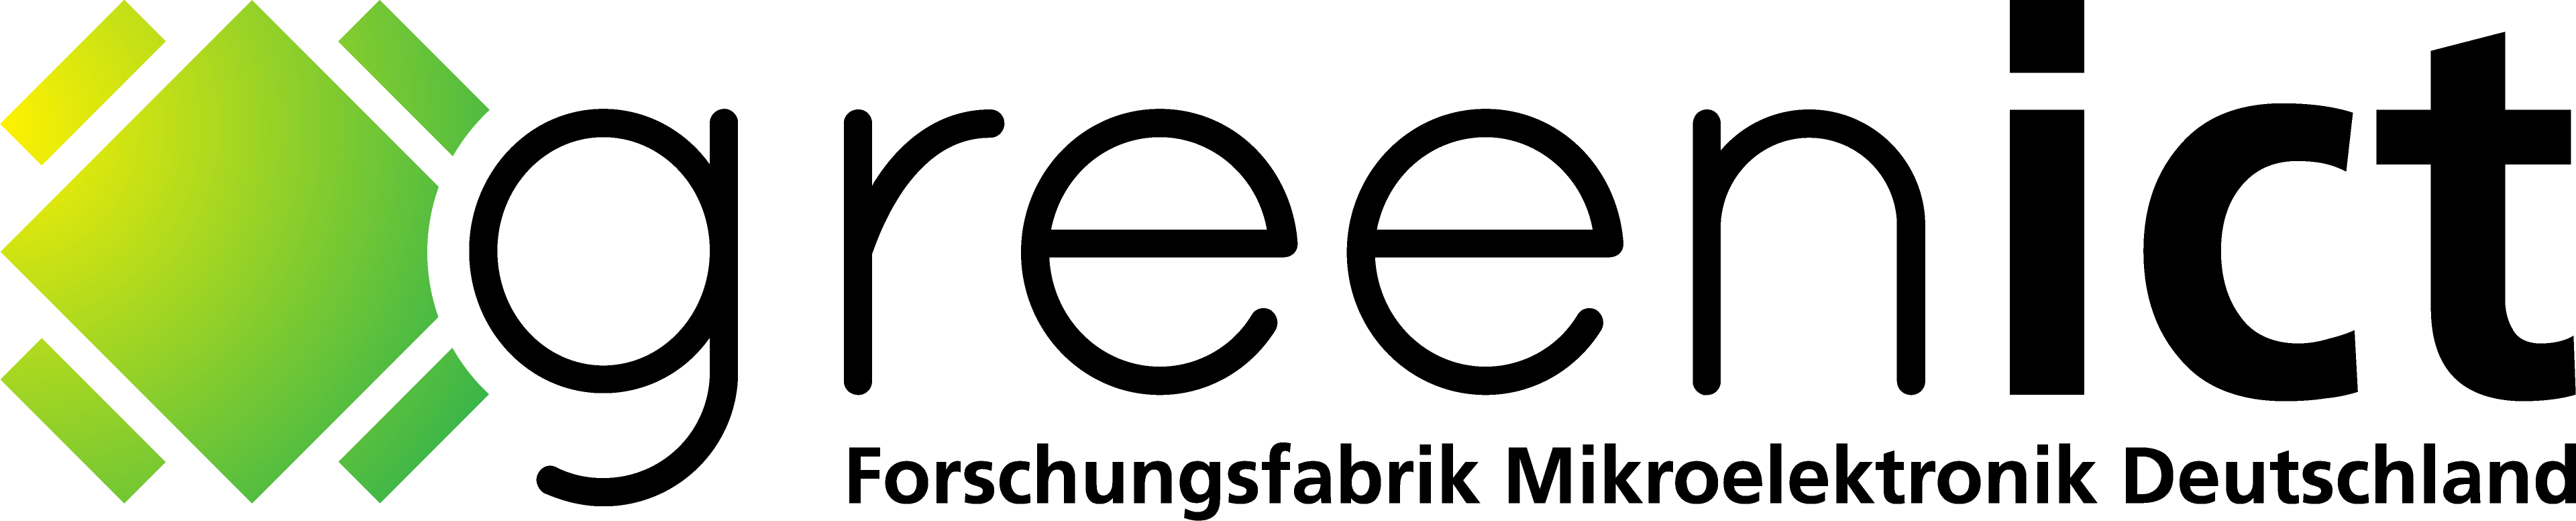 GreenICT_logo